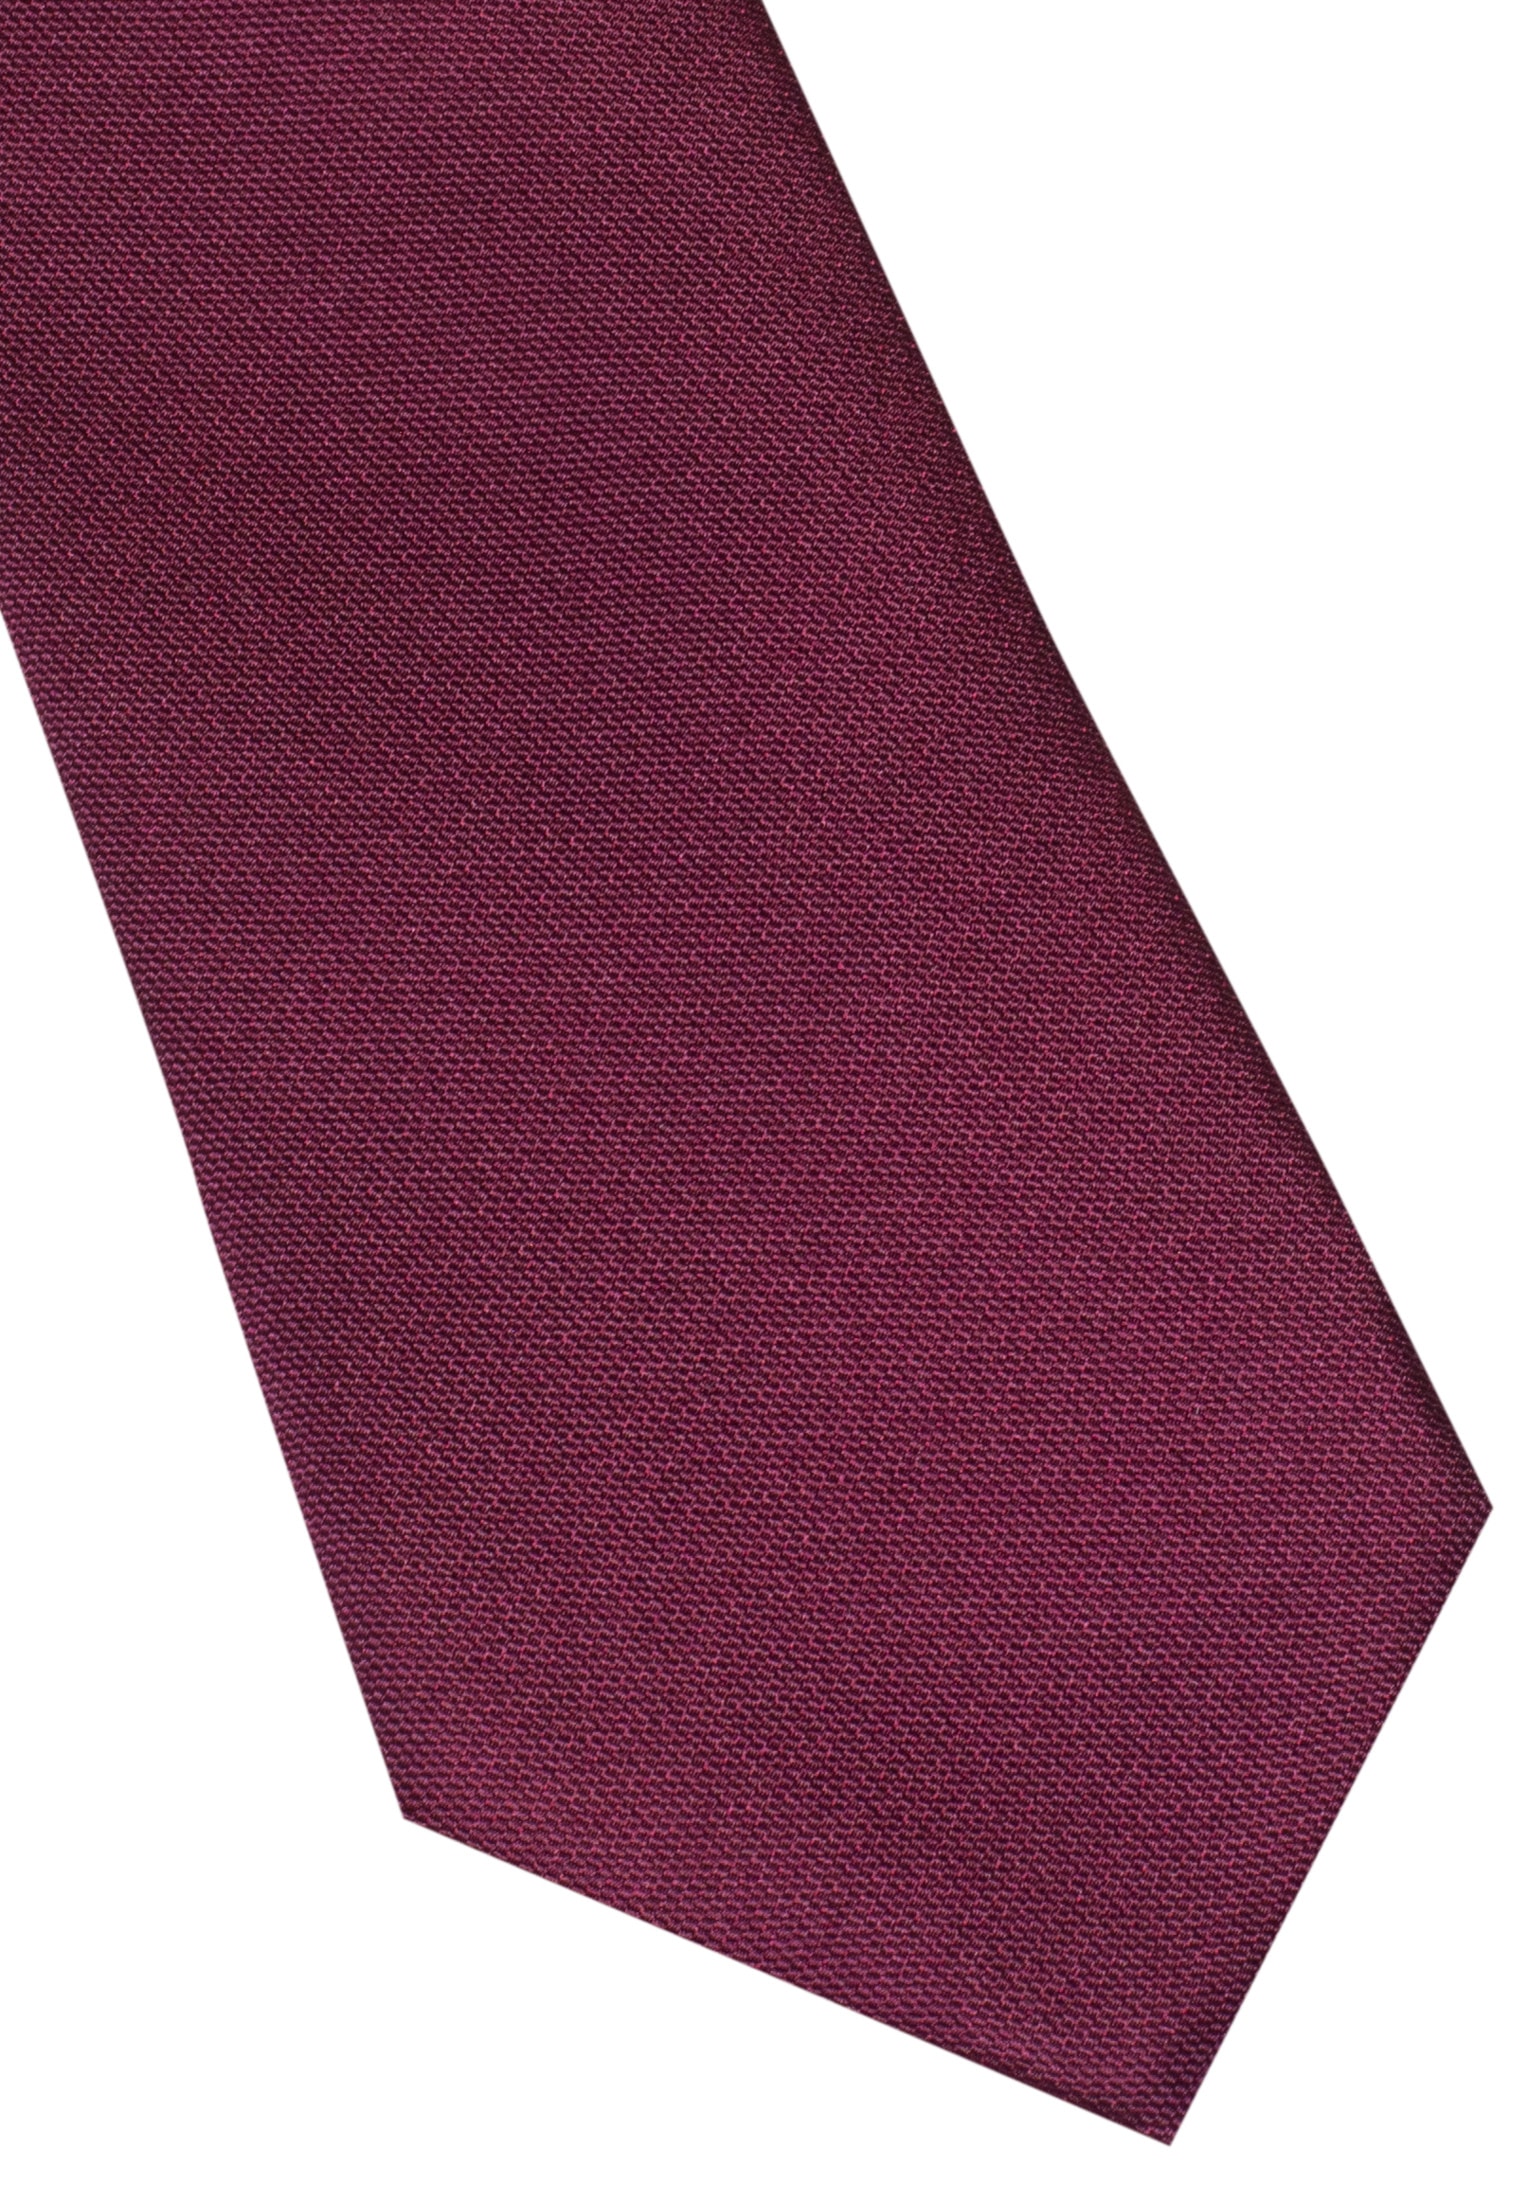 ➤ Krawatten ohne Mindestbestellwert shoppen